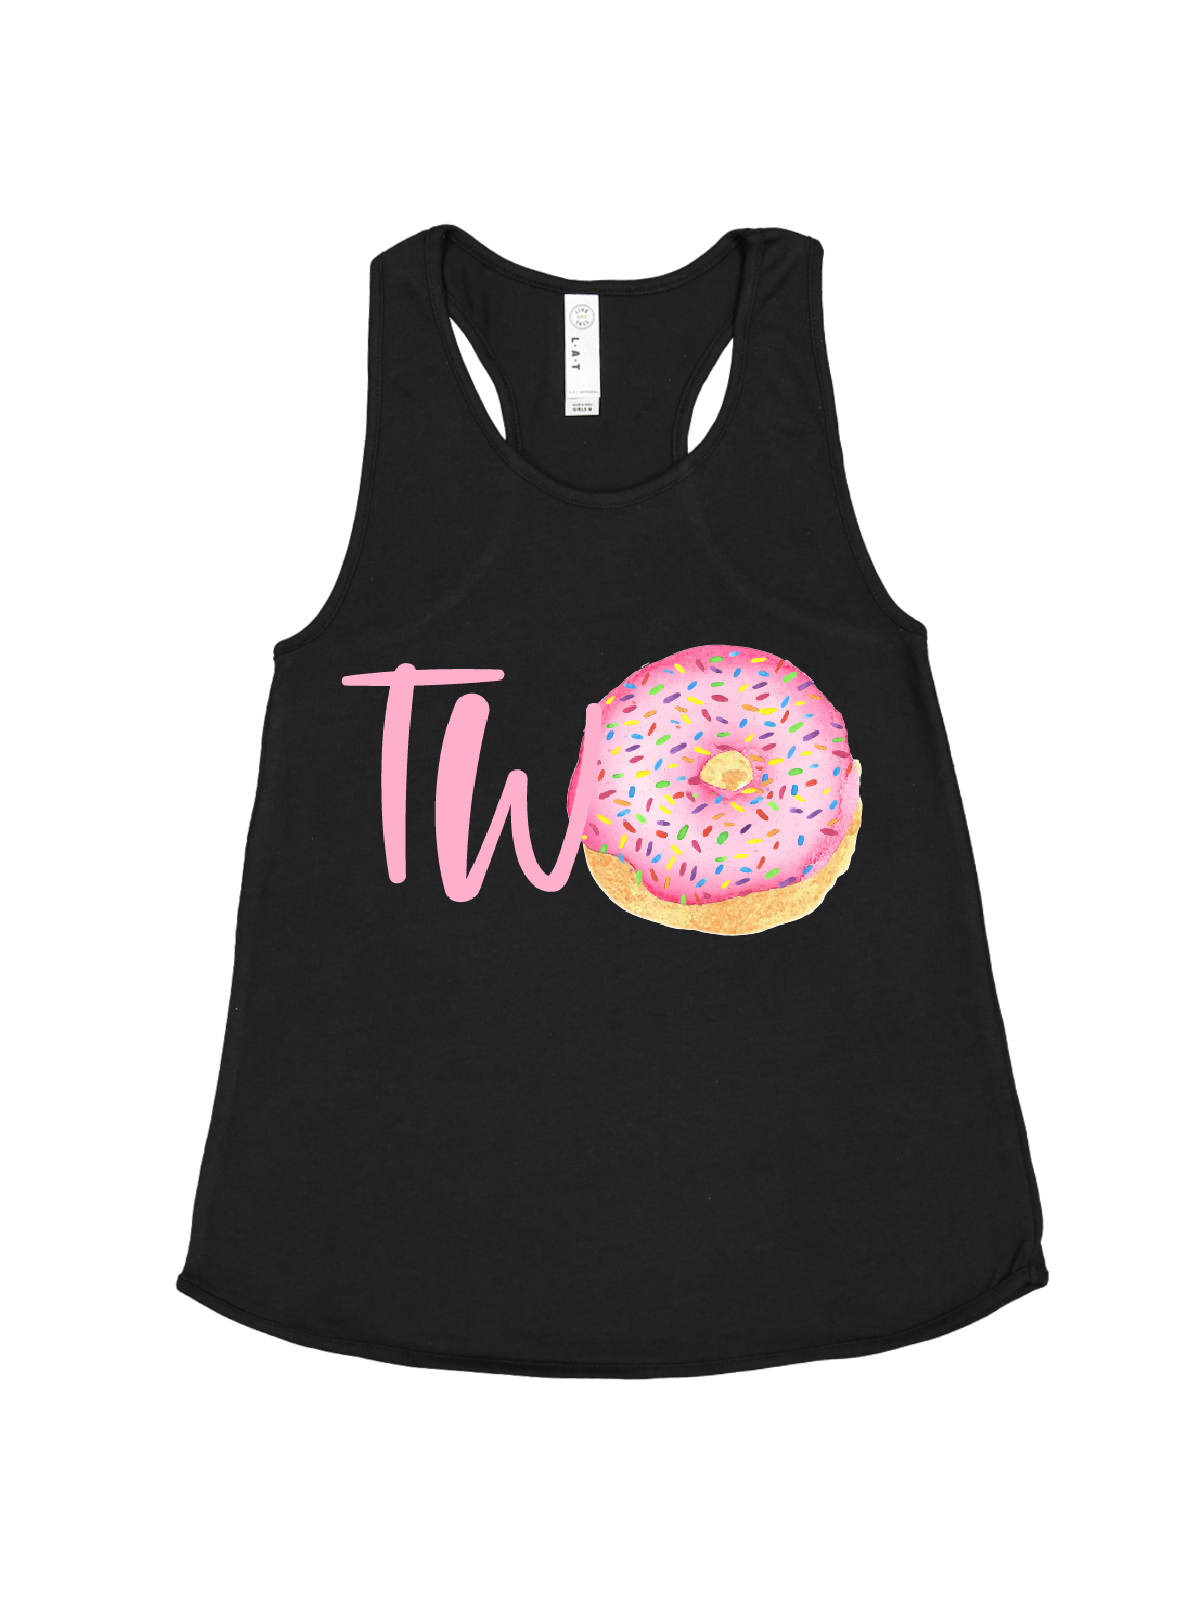 TWO donut birthday tank top in black